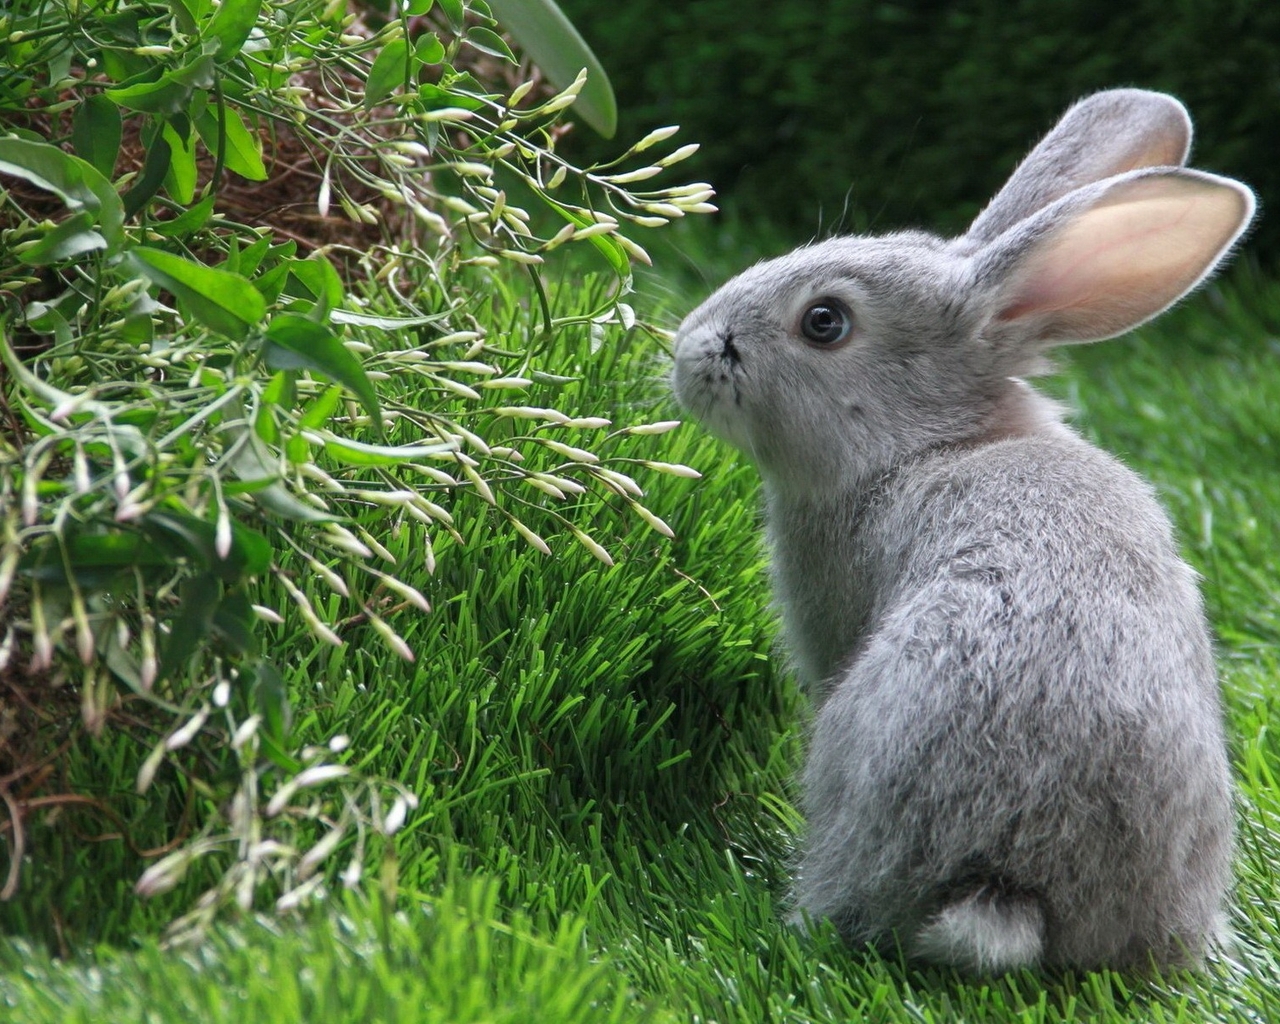 Картинка: Кролик, трава, зелень, серый